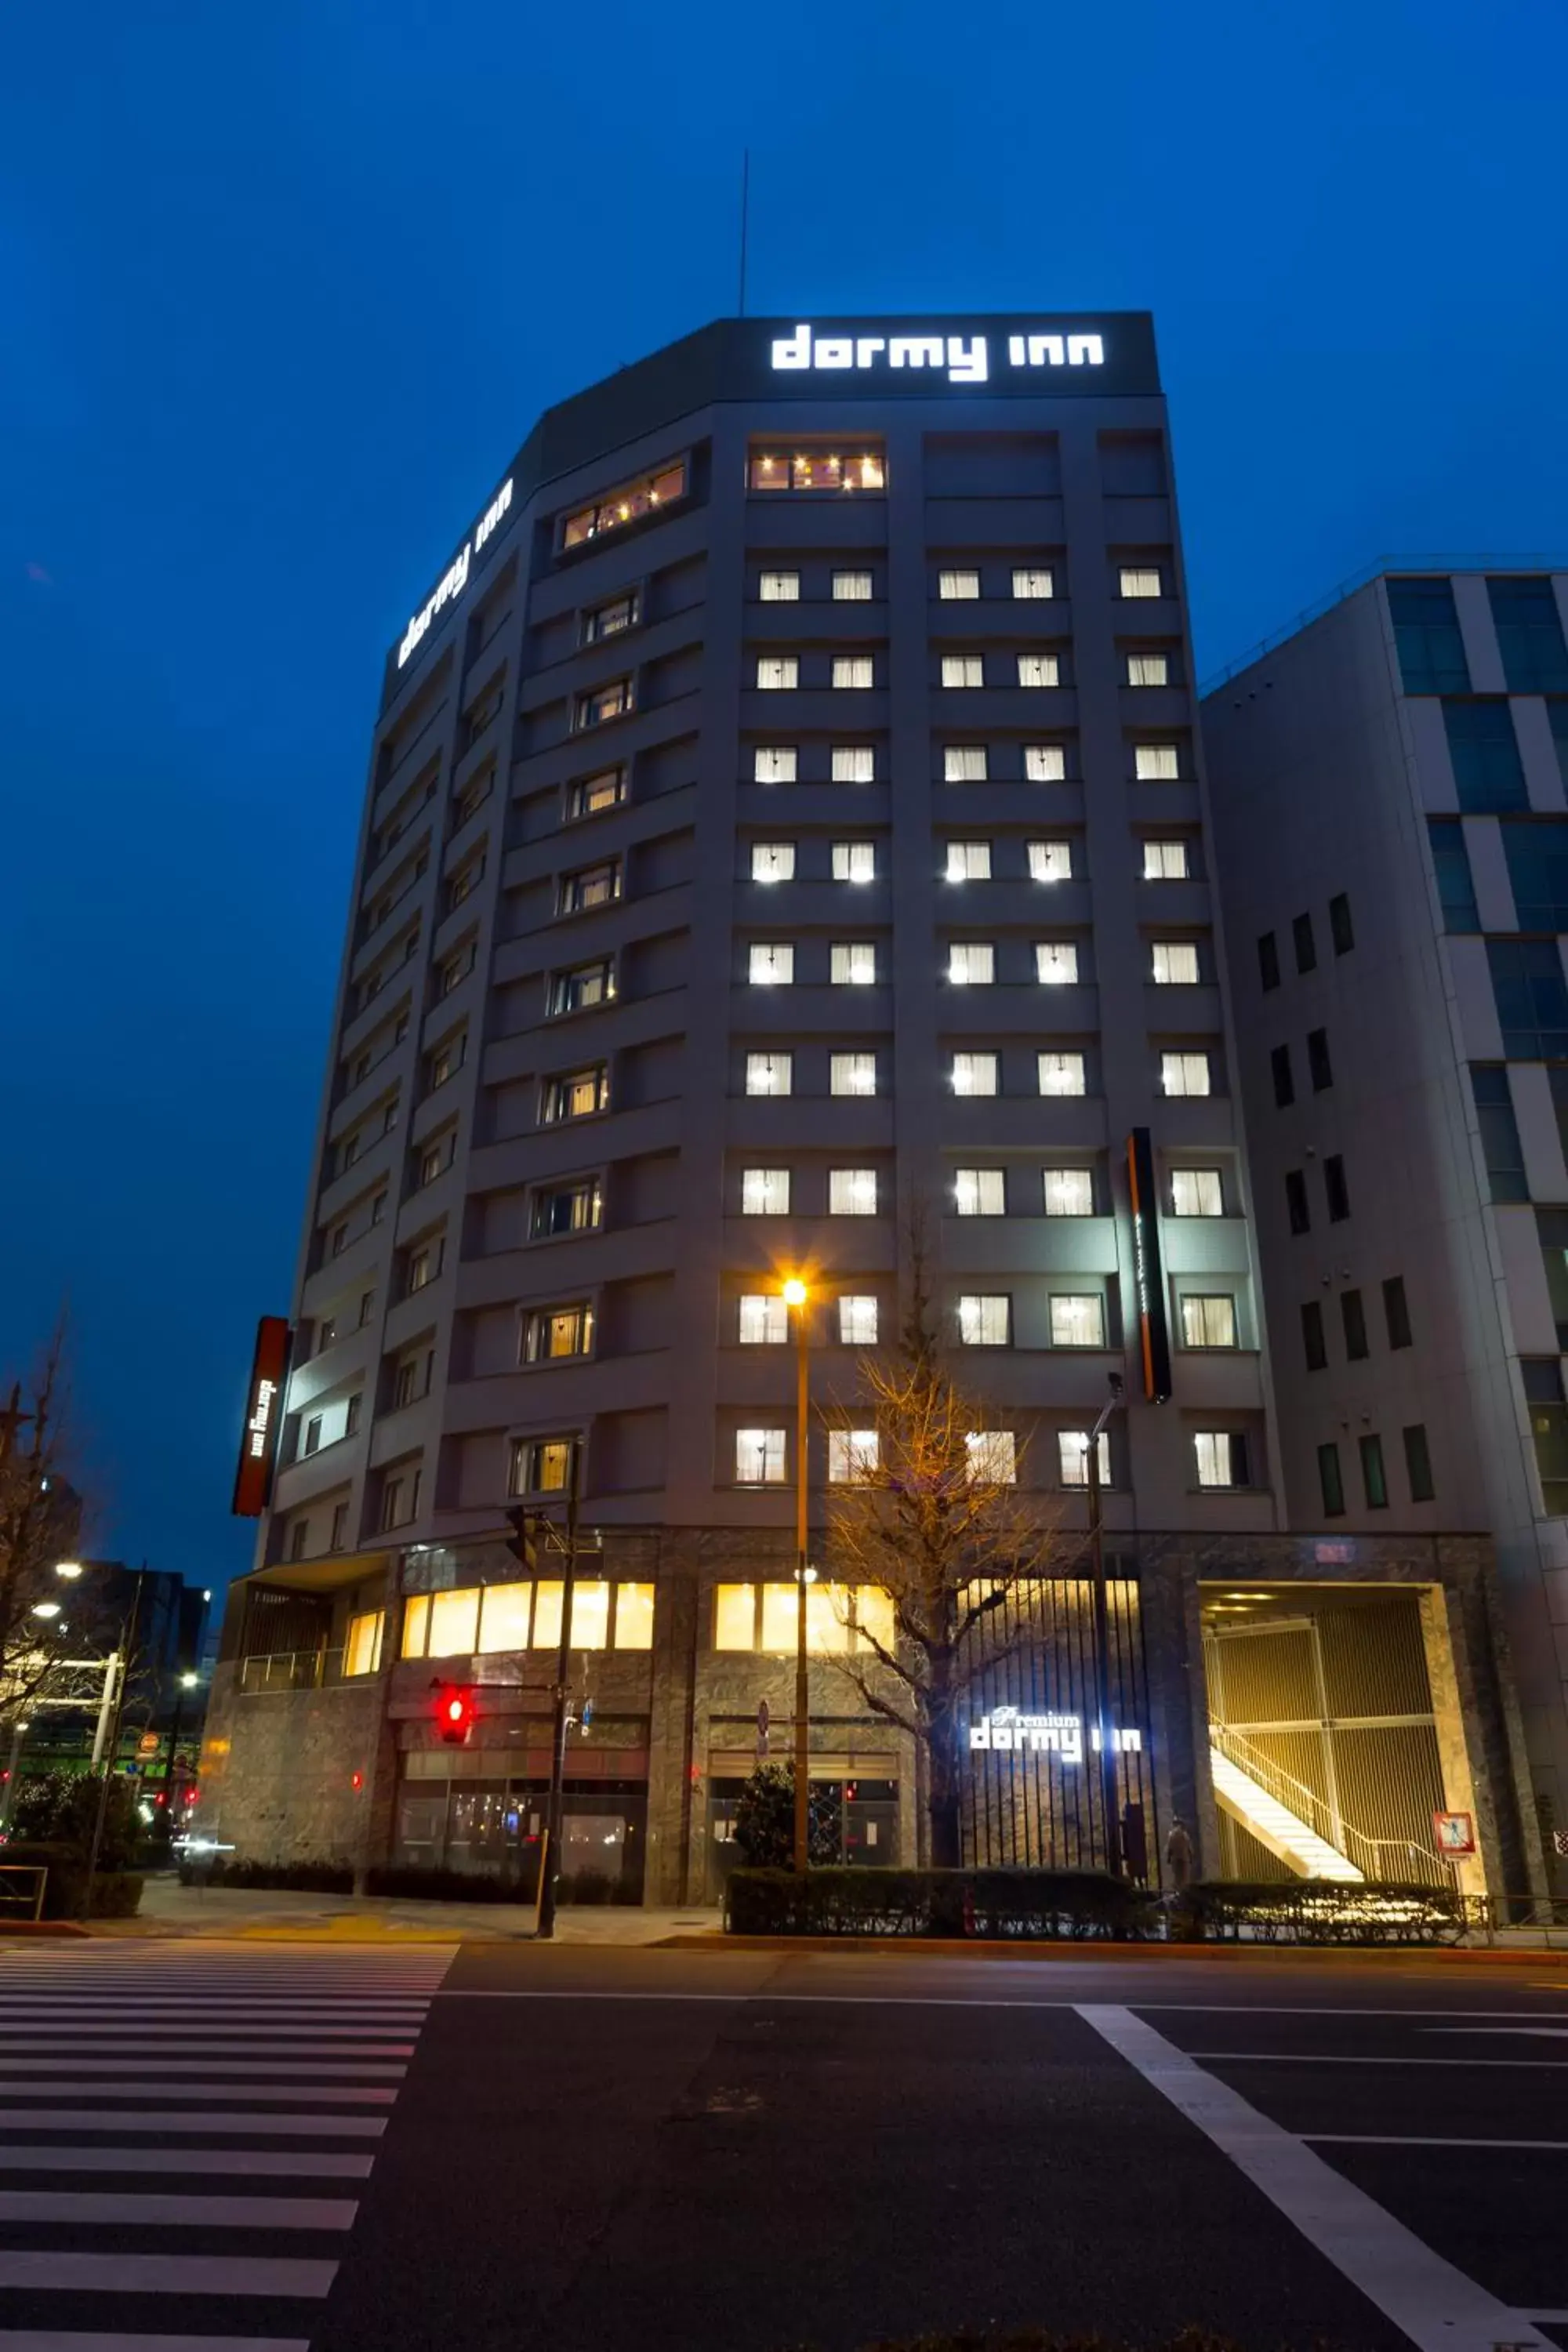 Facade/entrance in Myoujin-no-Yu Dormy Inn Premium Kanda